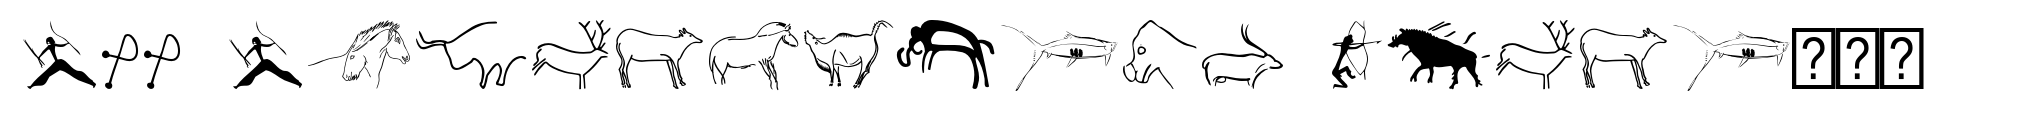 P22 Petroglyphs European image